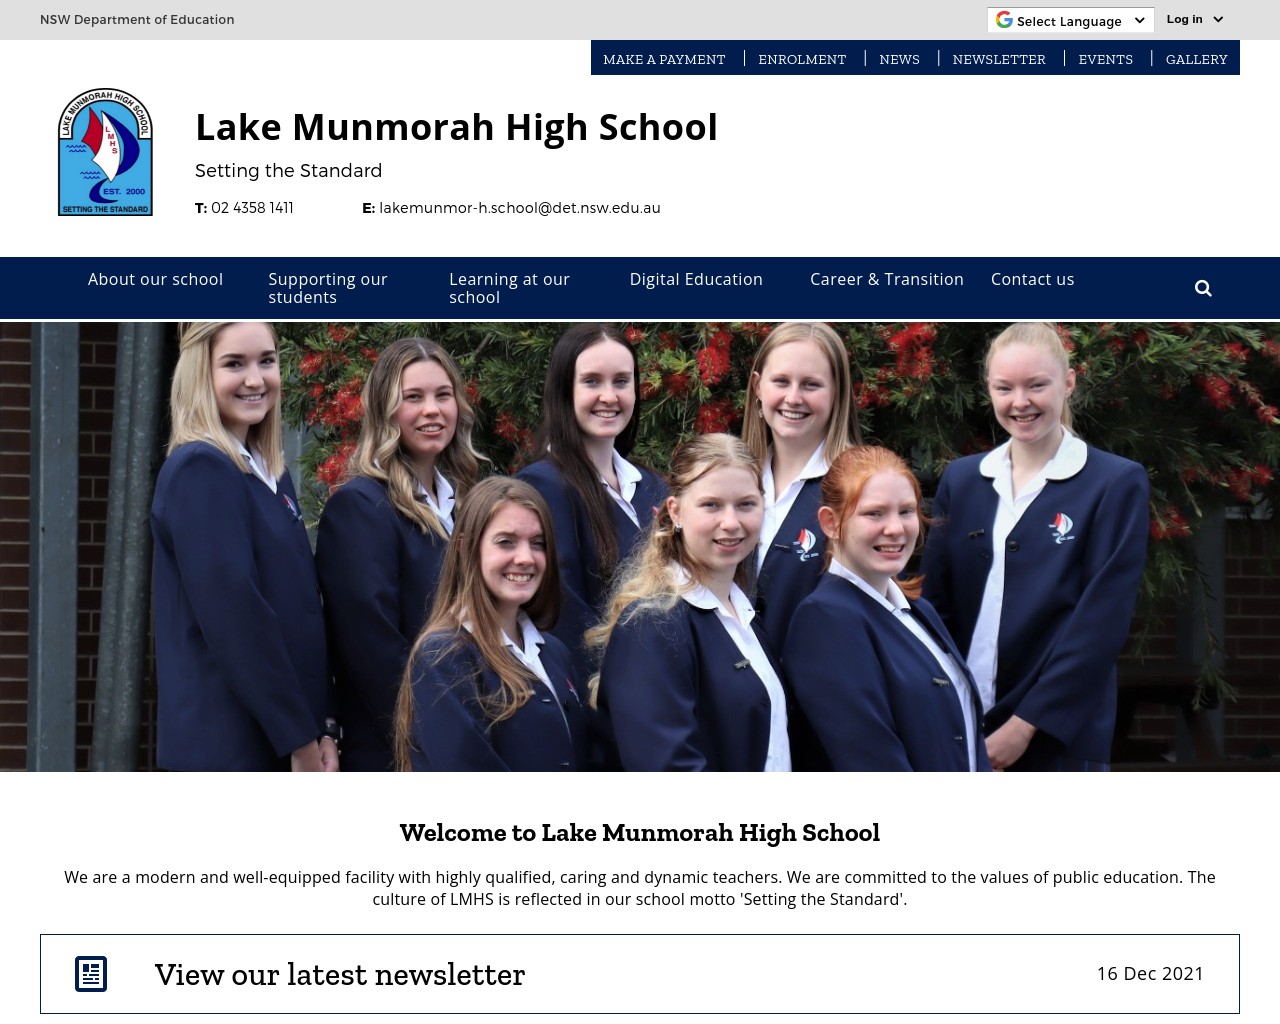 Lake Munmorah High School